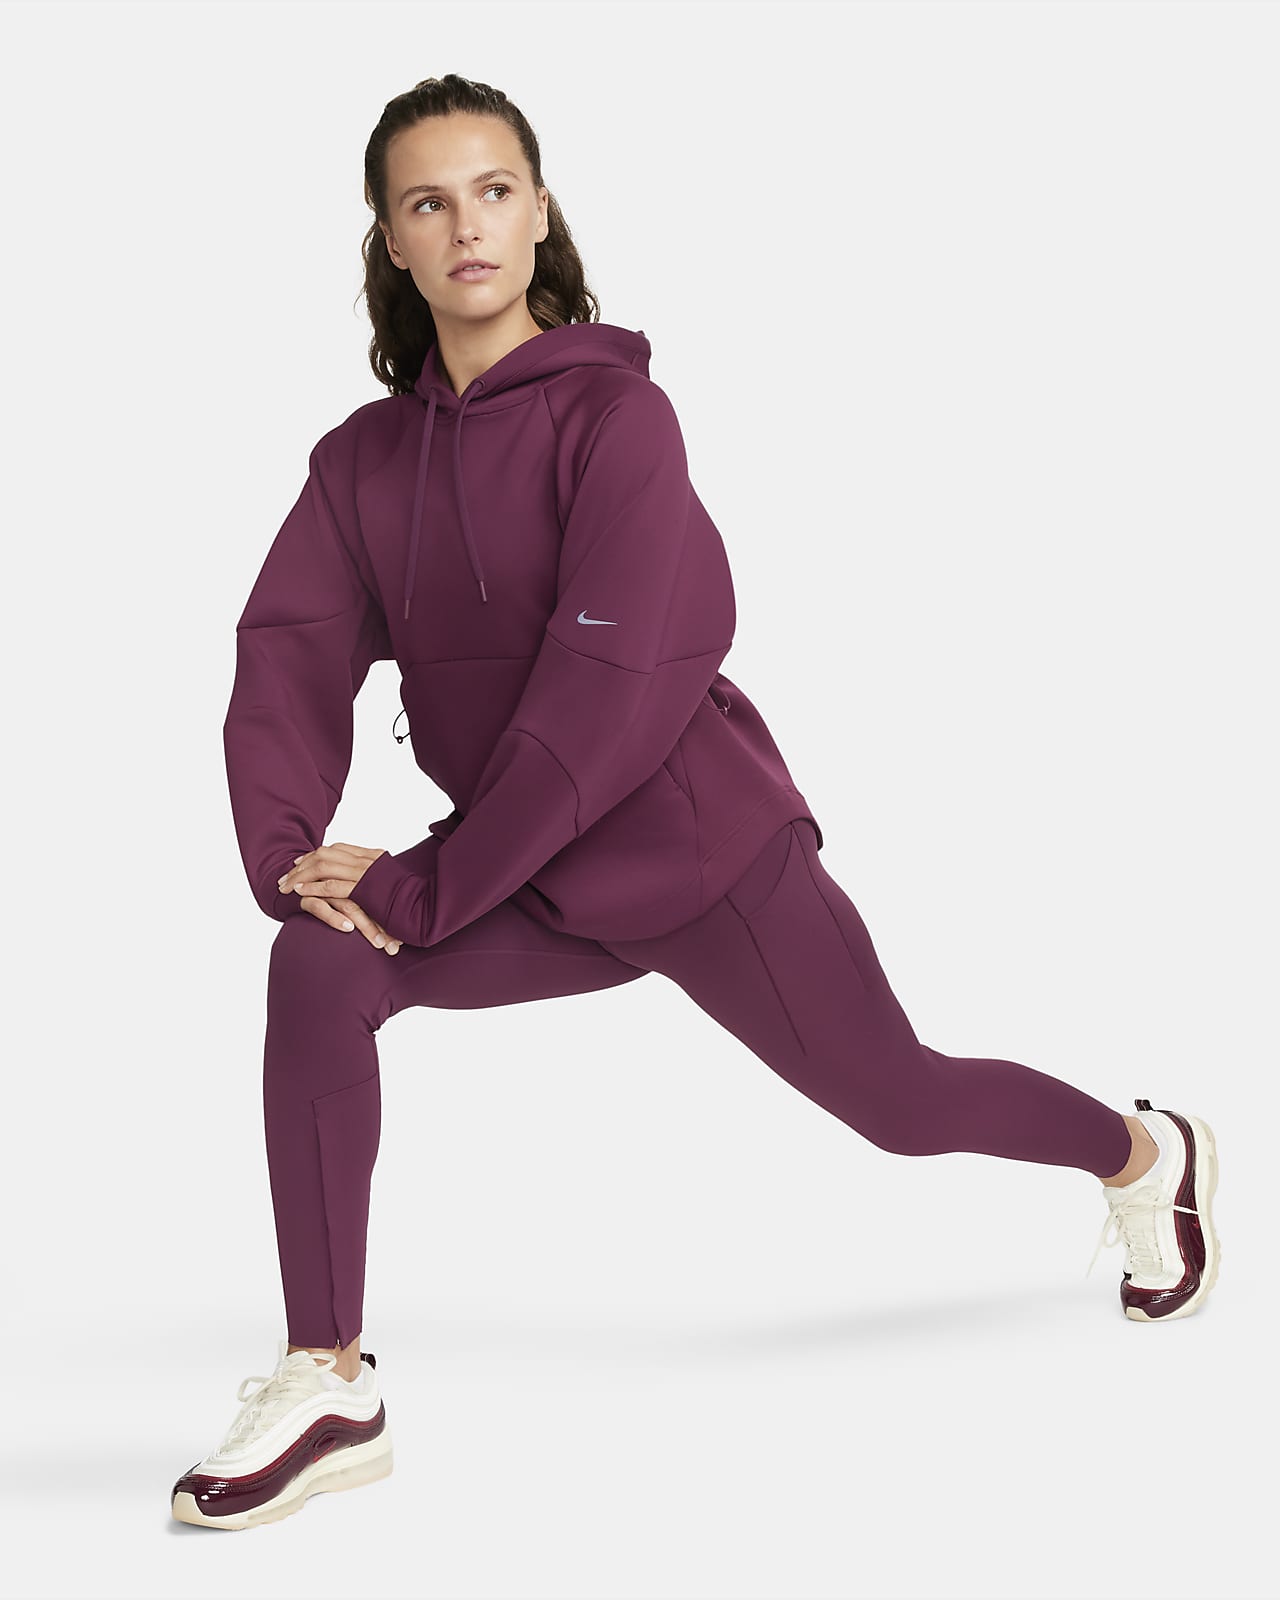 Nike Dri-Fit Ladies Red White Zip Up Activewear Track Jacket S